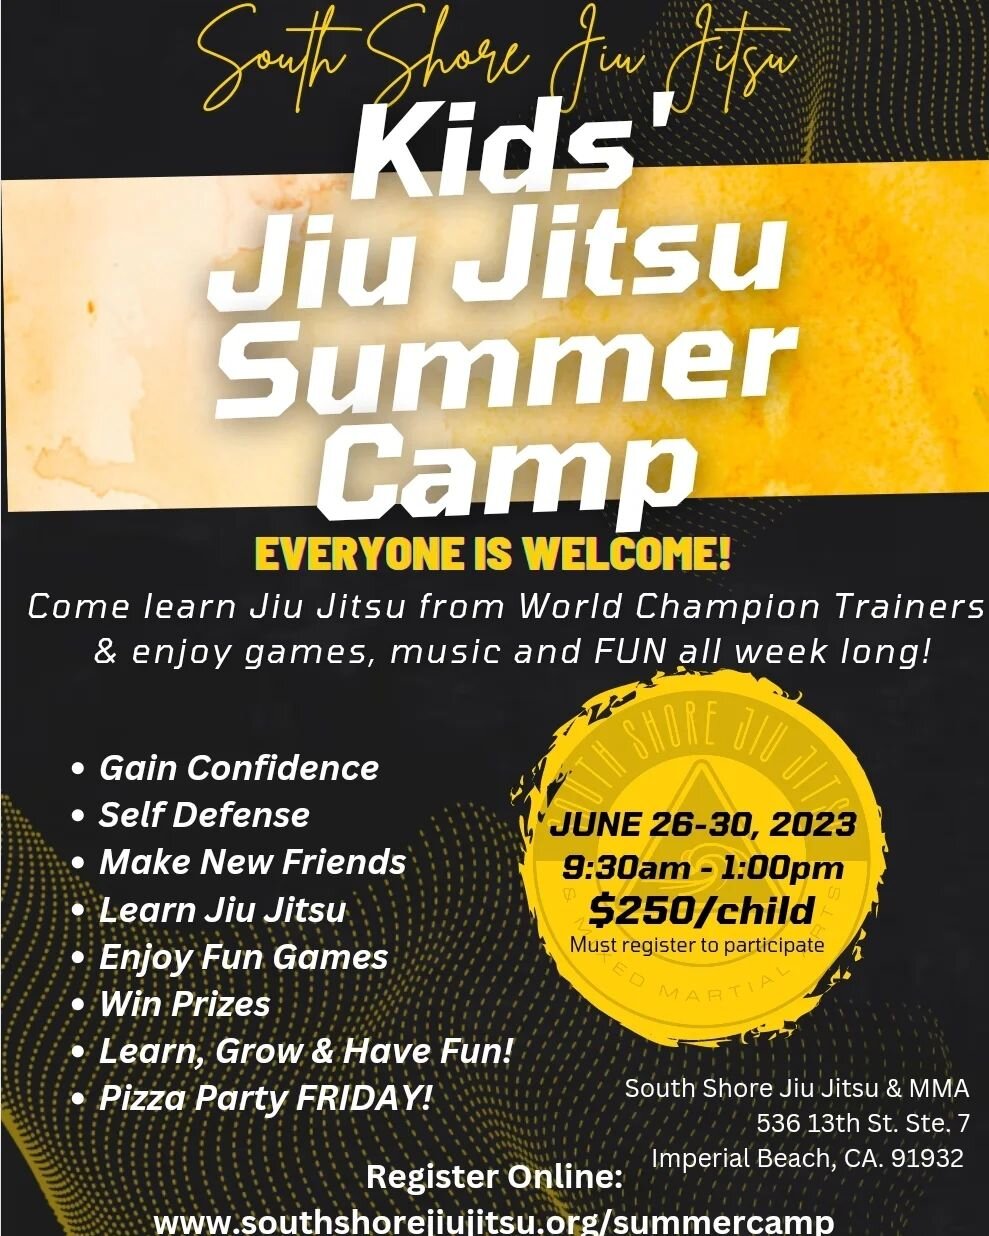 ☀️ 🌊🤙 @southshorejiujitsu
.
.
‼️Don't miss out!
Register Online!! ➡️➡️➡️
Www.southshorejiujitsu.org/summercamp